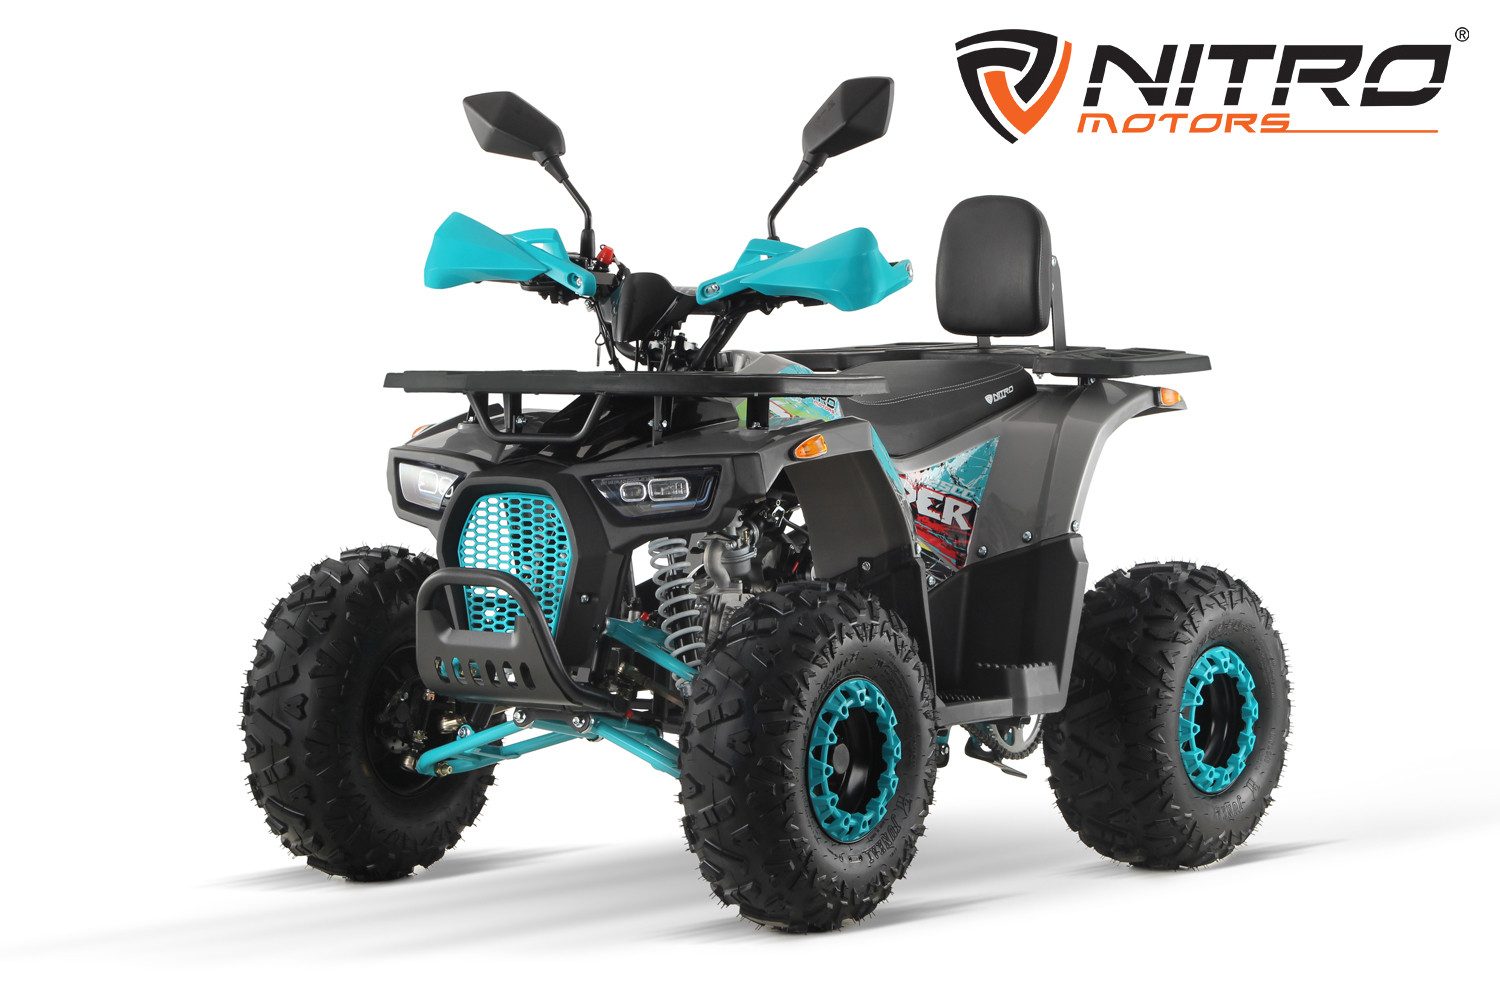 Nitro Motors Quad NITRO MOTORS 125cc midi Kinder Quad Dustrider RS8-A Sport, 125,00 ccm, 45 km/h, E-Start, LED Beleuchtung, Spur/Sturz einstellbar, stufenlose Drossel